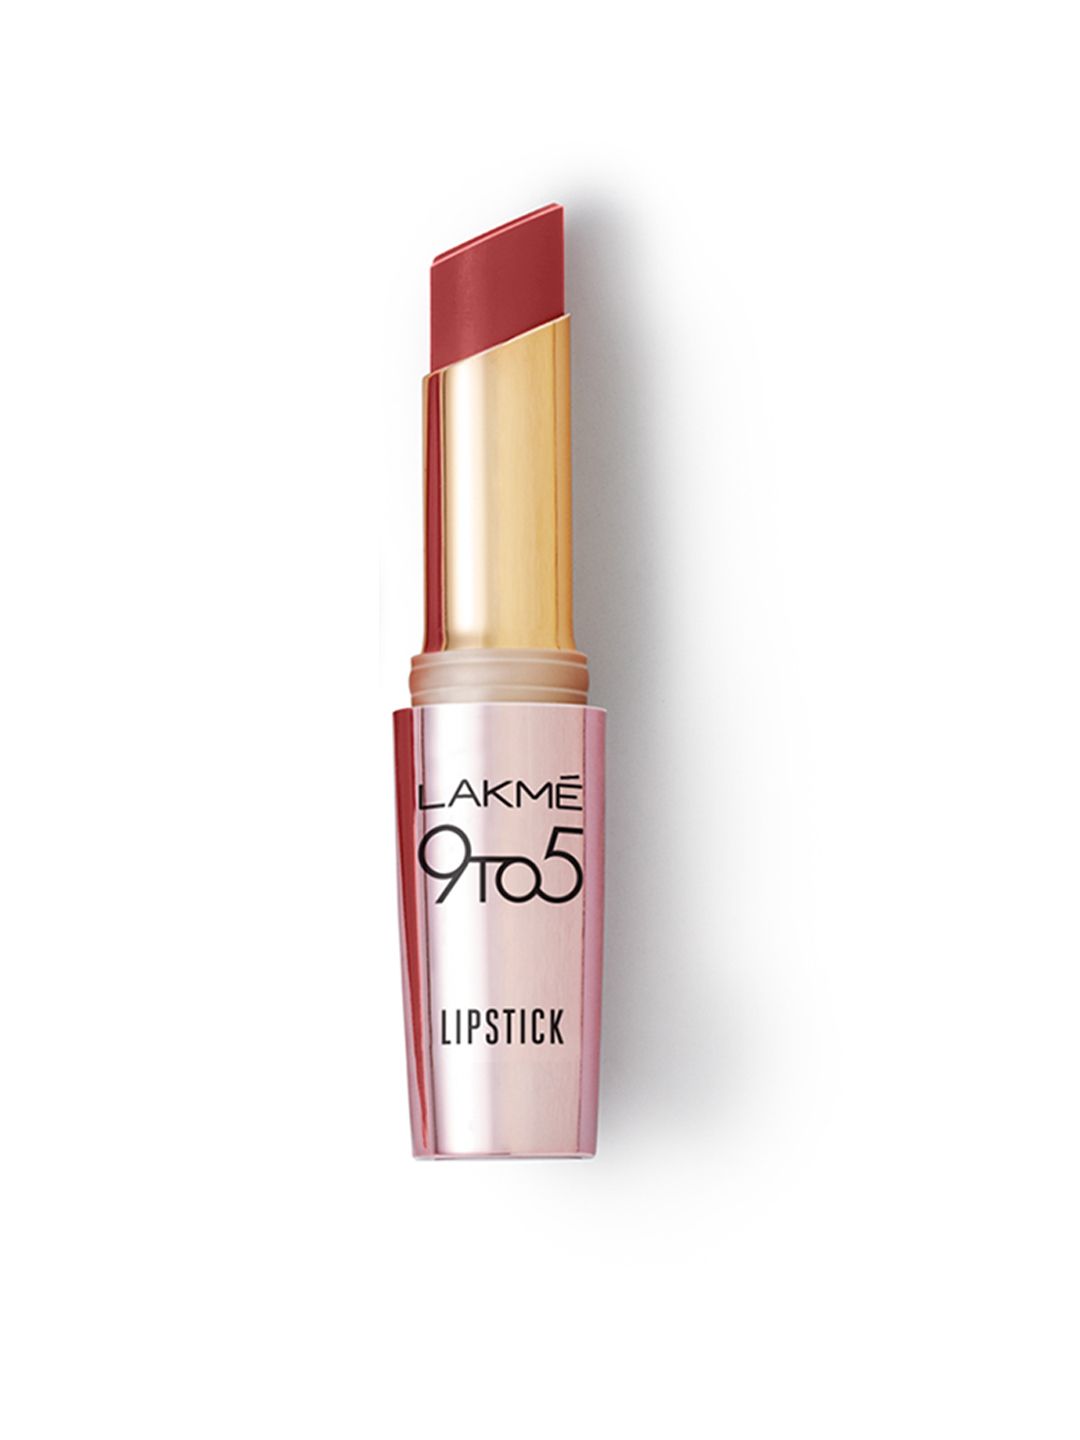 Lakme 9TO5 Primer + Matte Lipstick - MR4 Roseatte Red Price in India